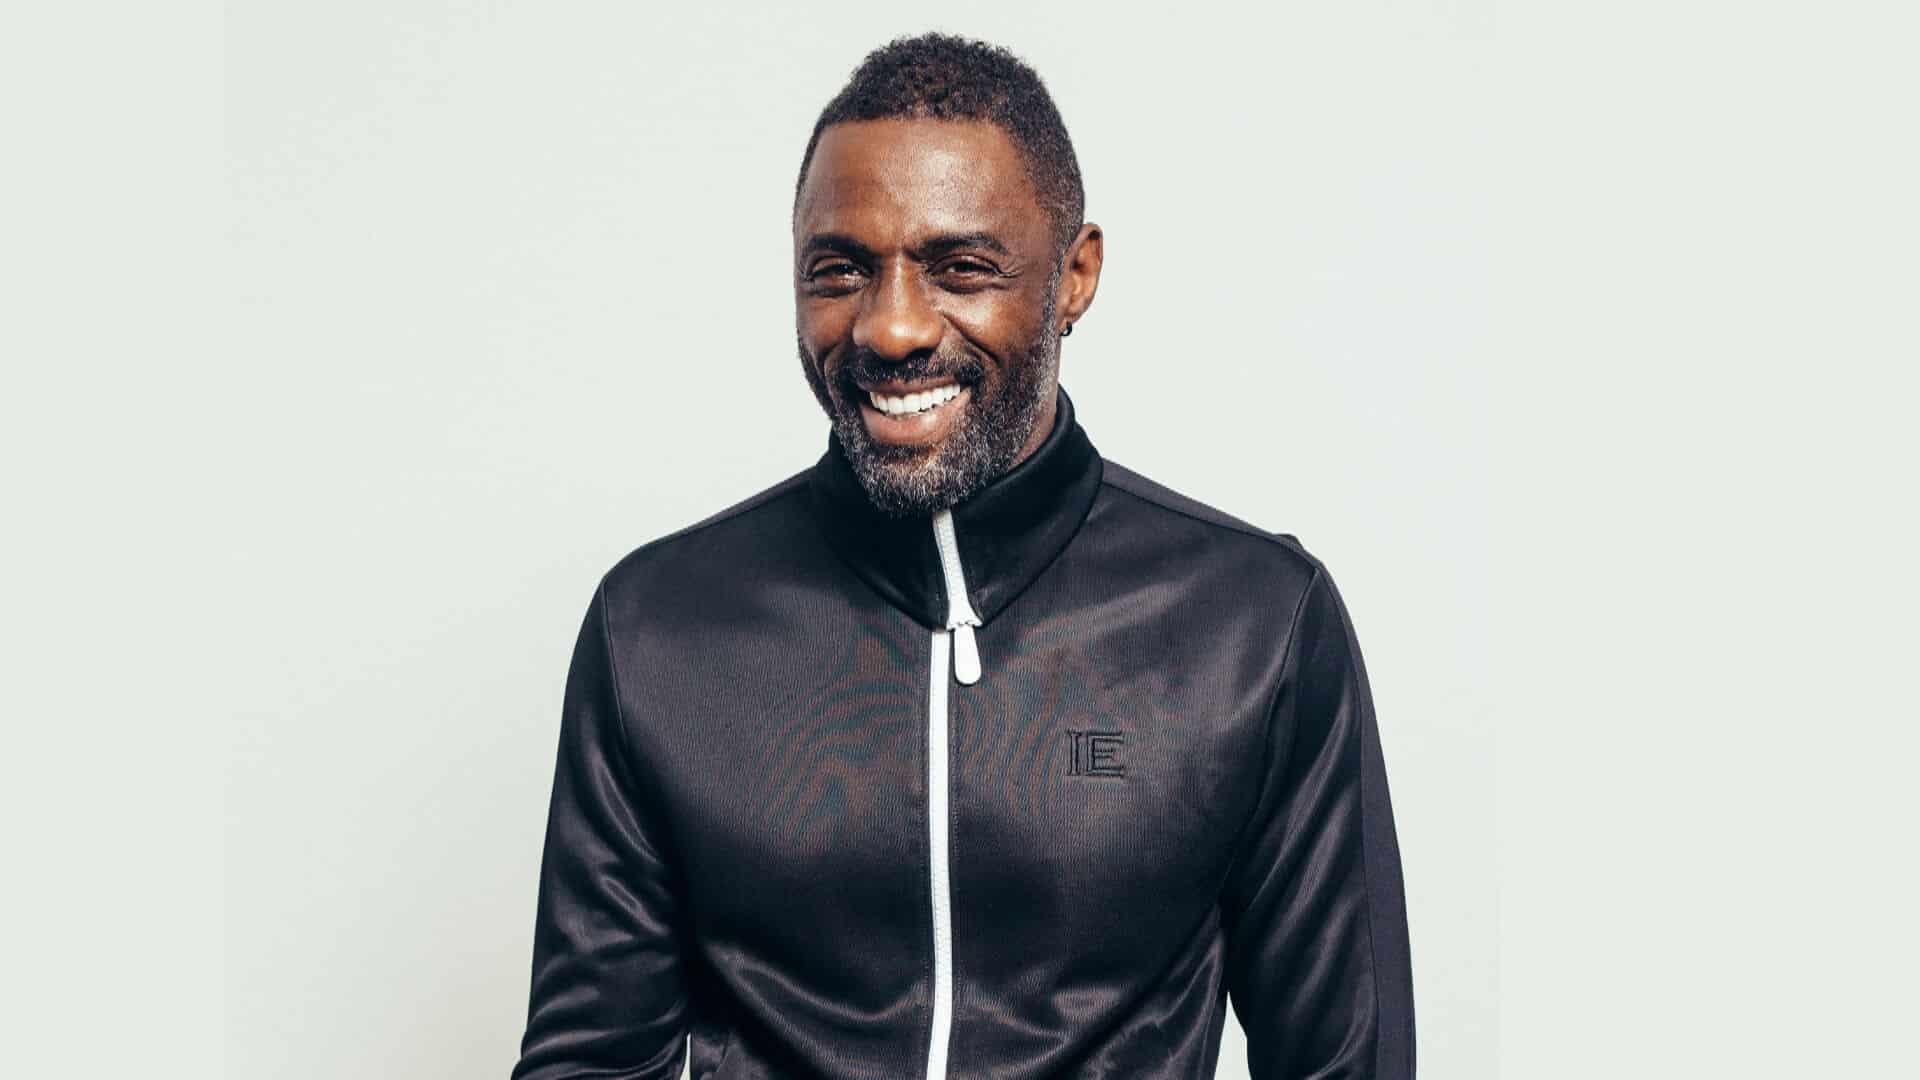 Idris Elba drops swanky new single ‘Biggest’: Listen